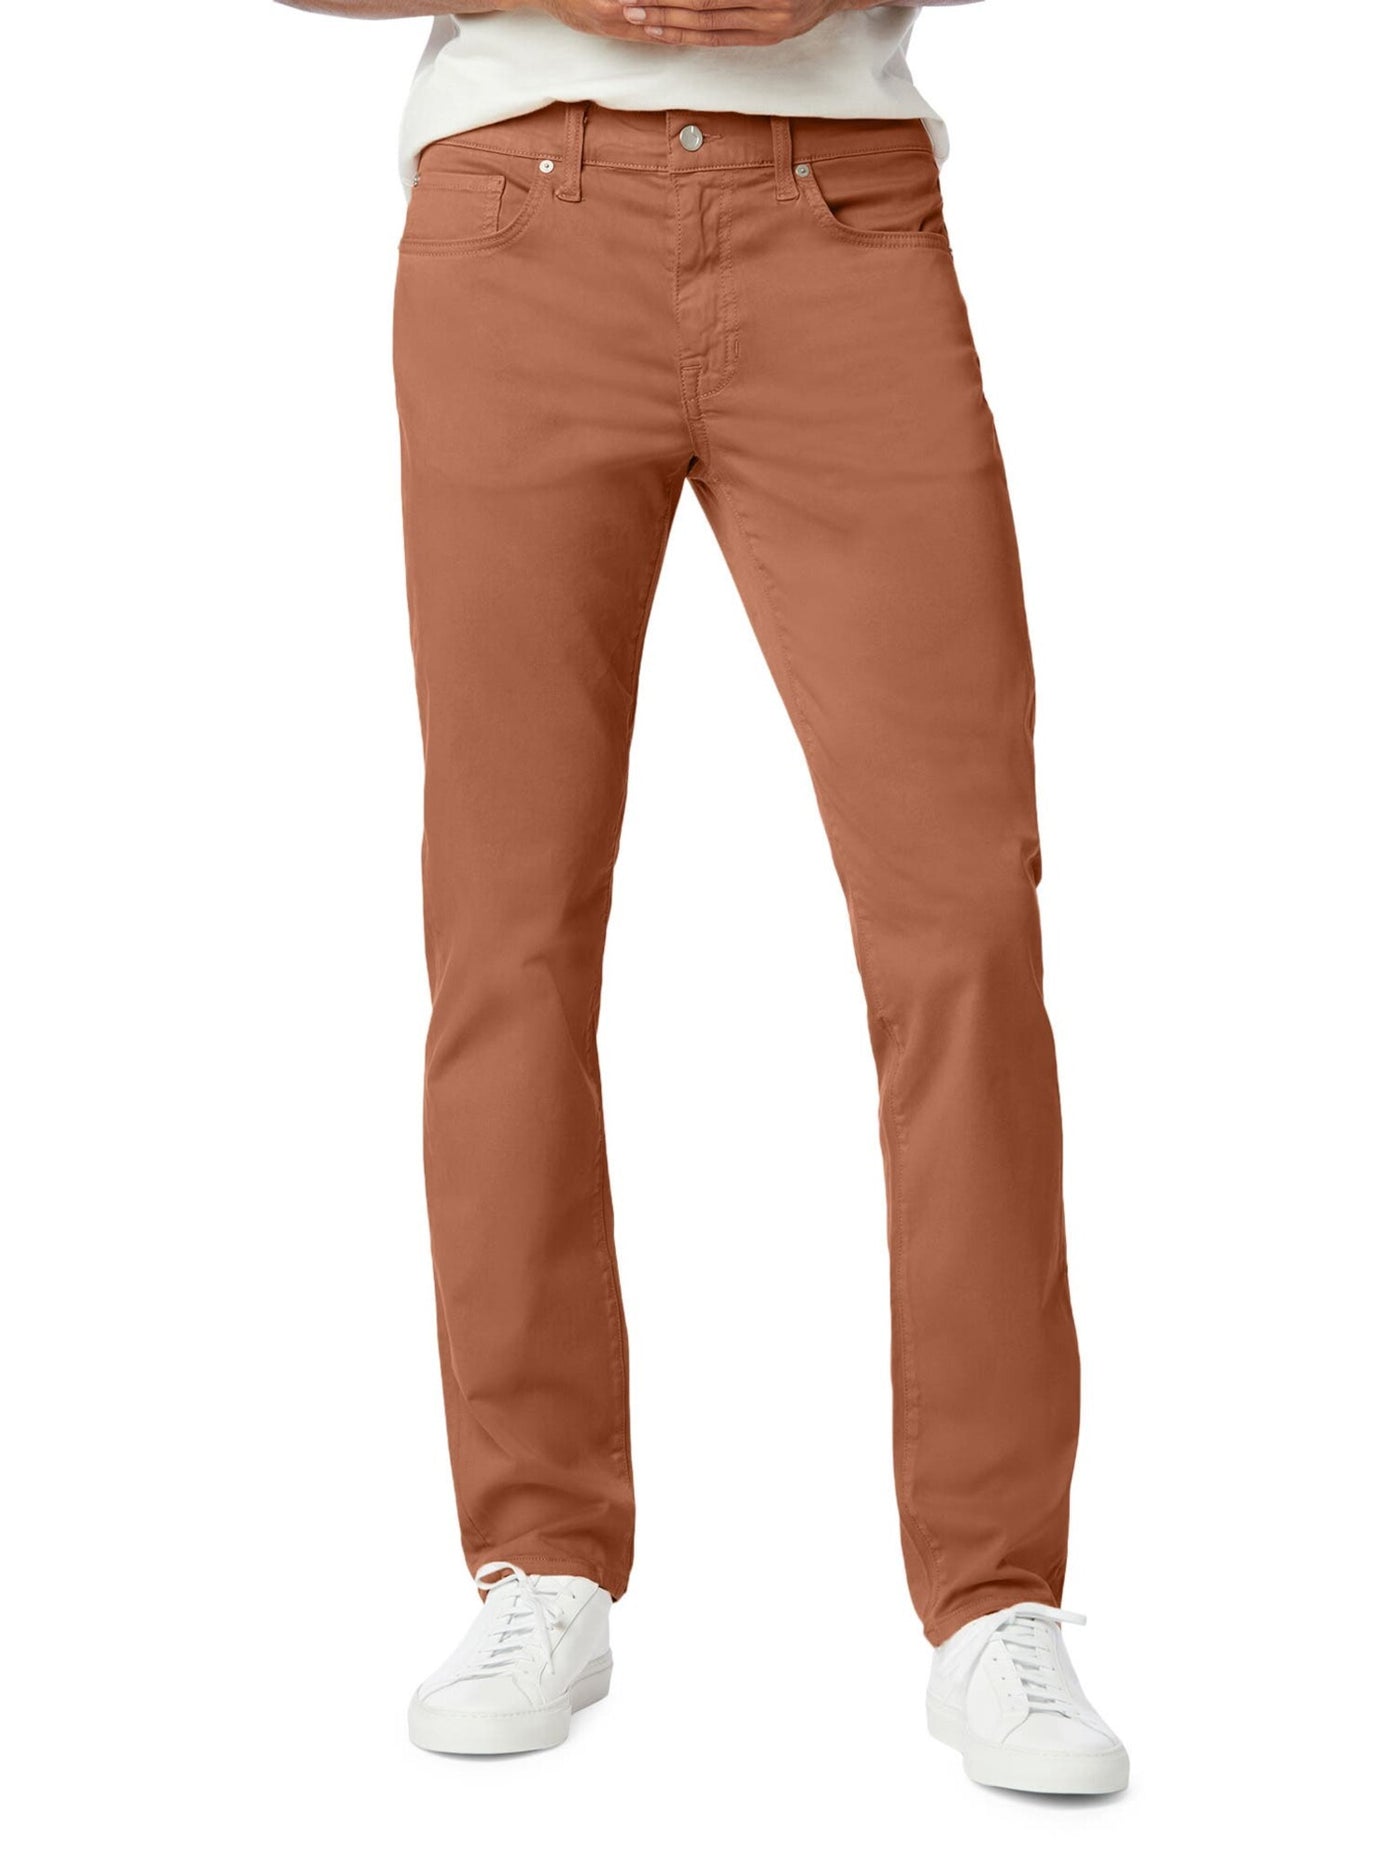 JOE'S Mens The Asher Orange Flat Front, Tapered, Slim Fit Pants 34W/ 32L